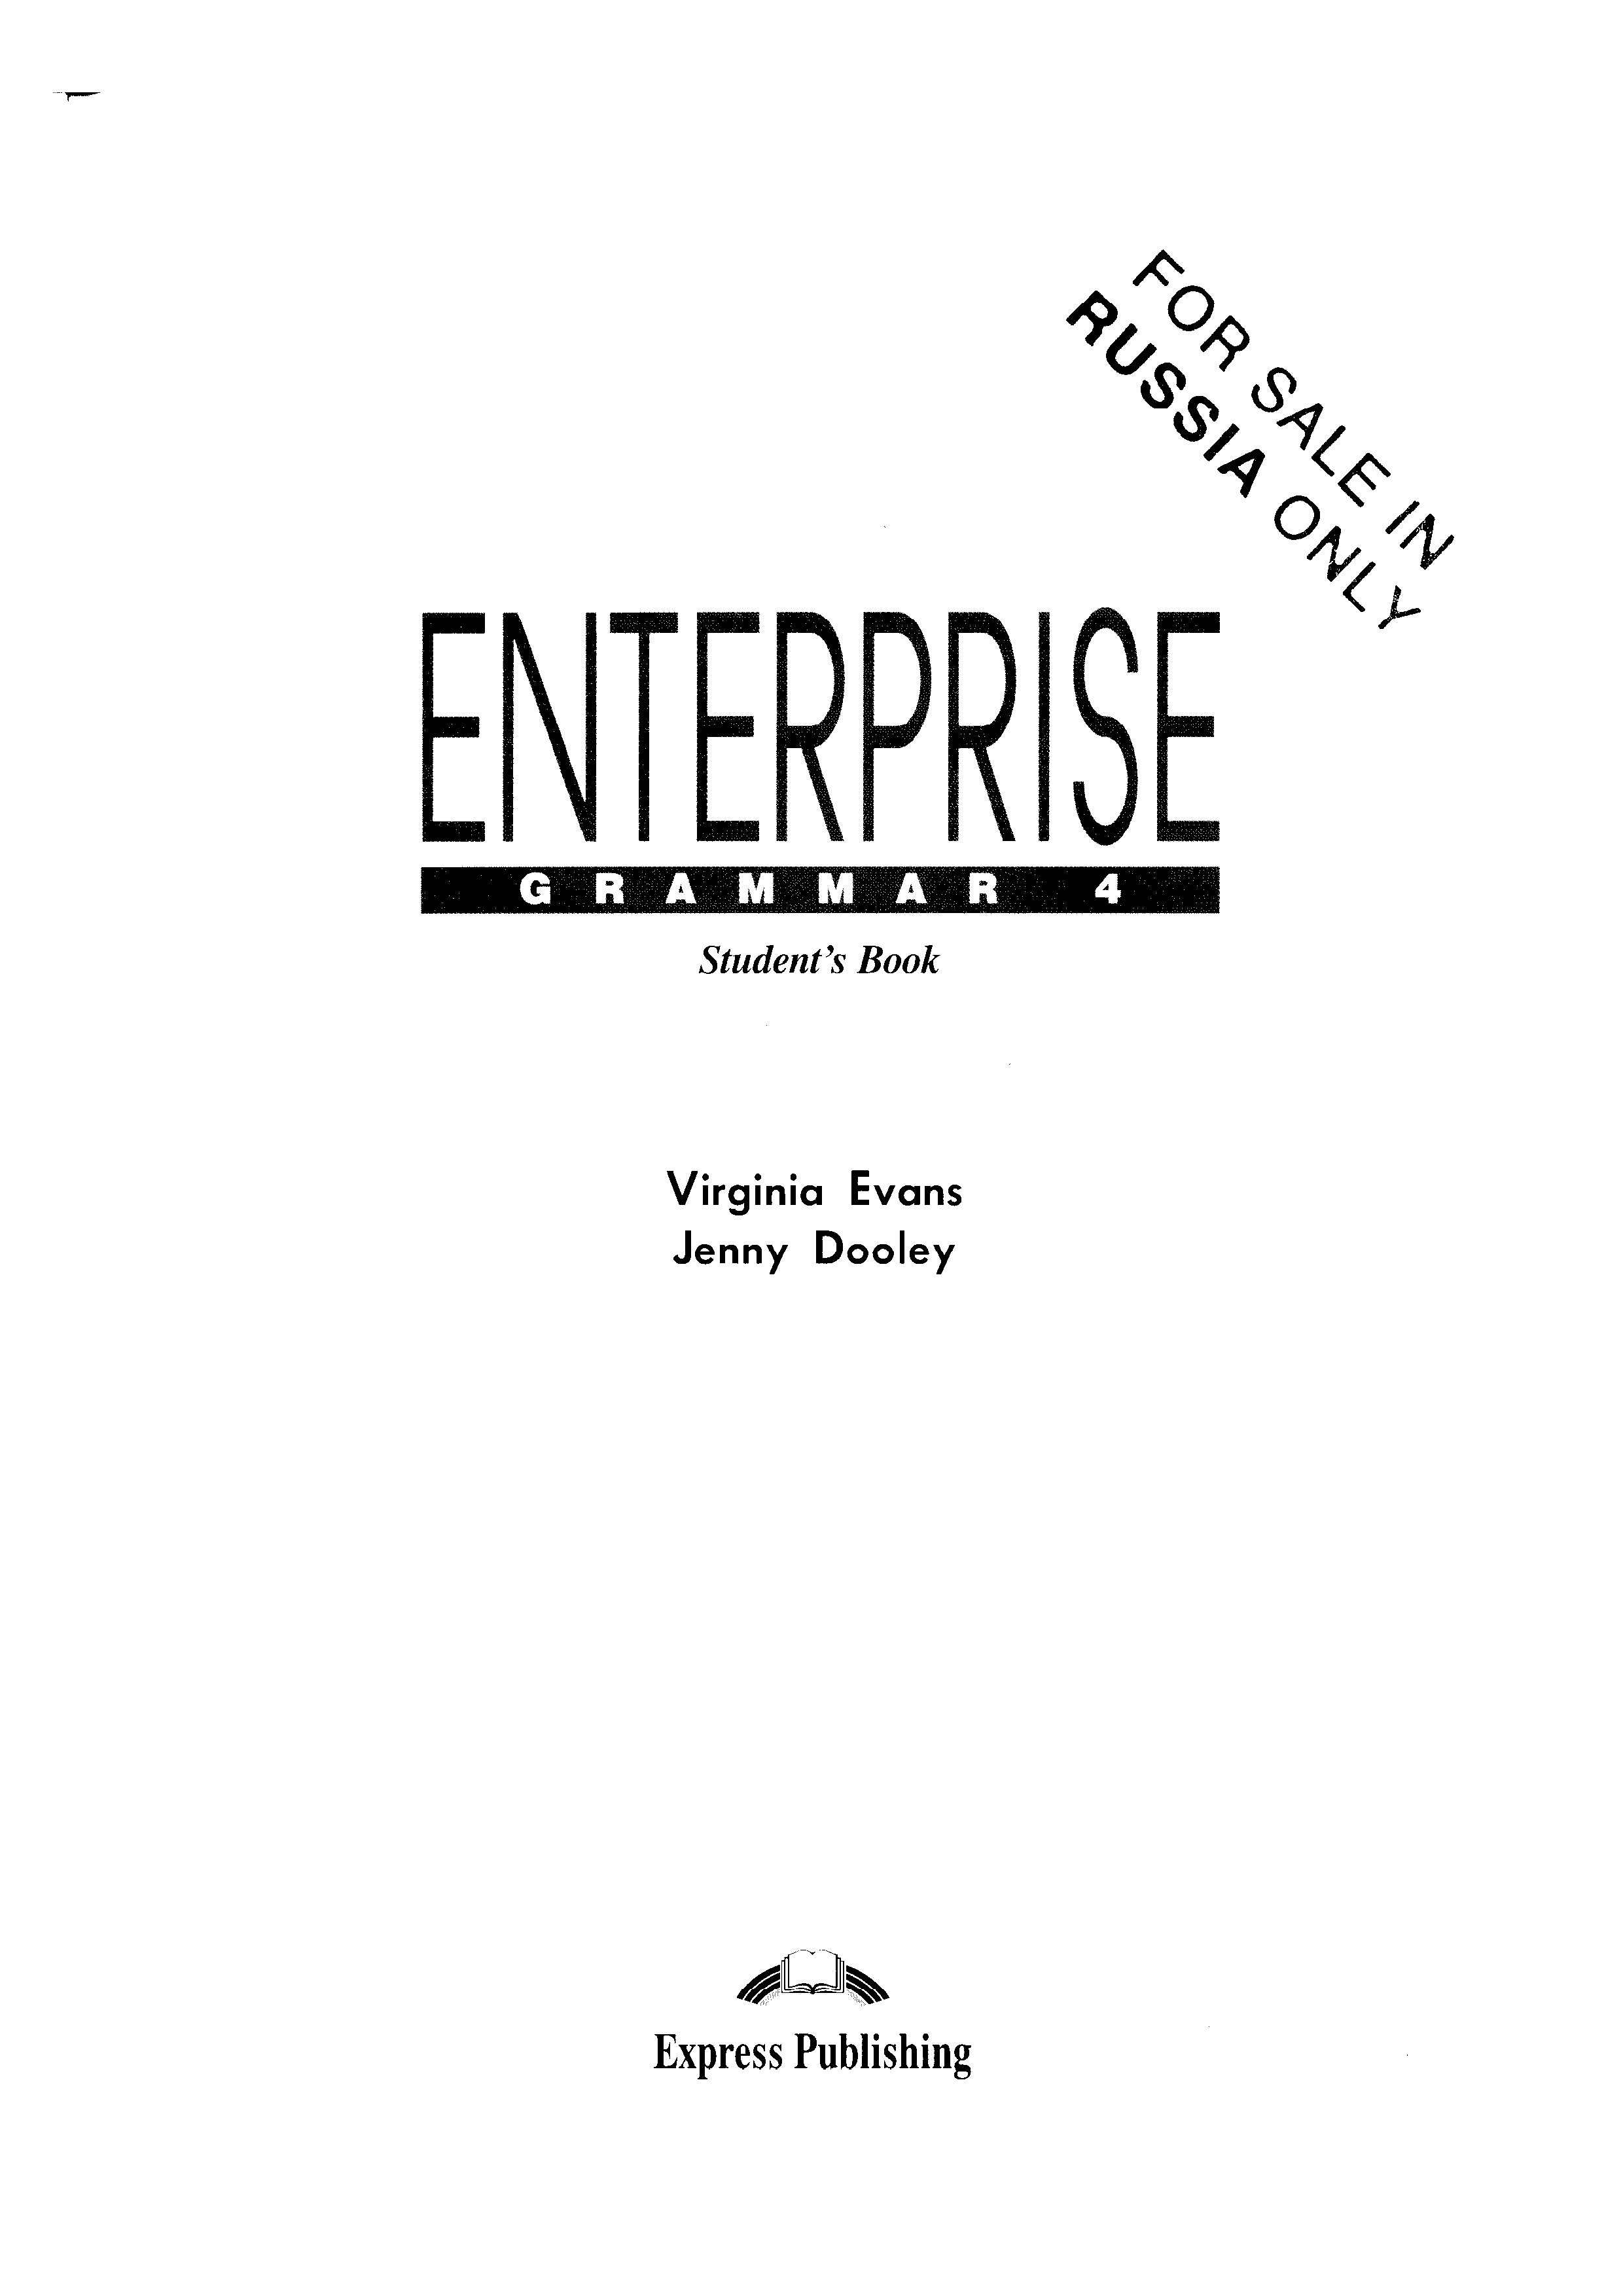 Enterprise grammar books. Enterprise Grammar 4. Enterprise Grammar 4 student's book. Enterprise 4 Grammar book. Enterprise книги.